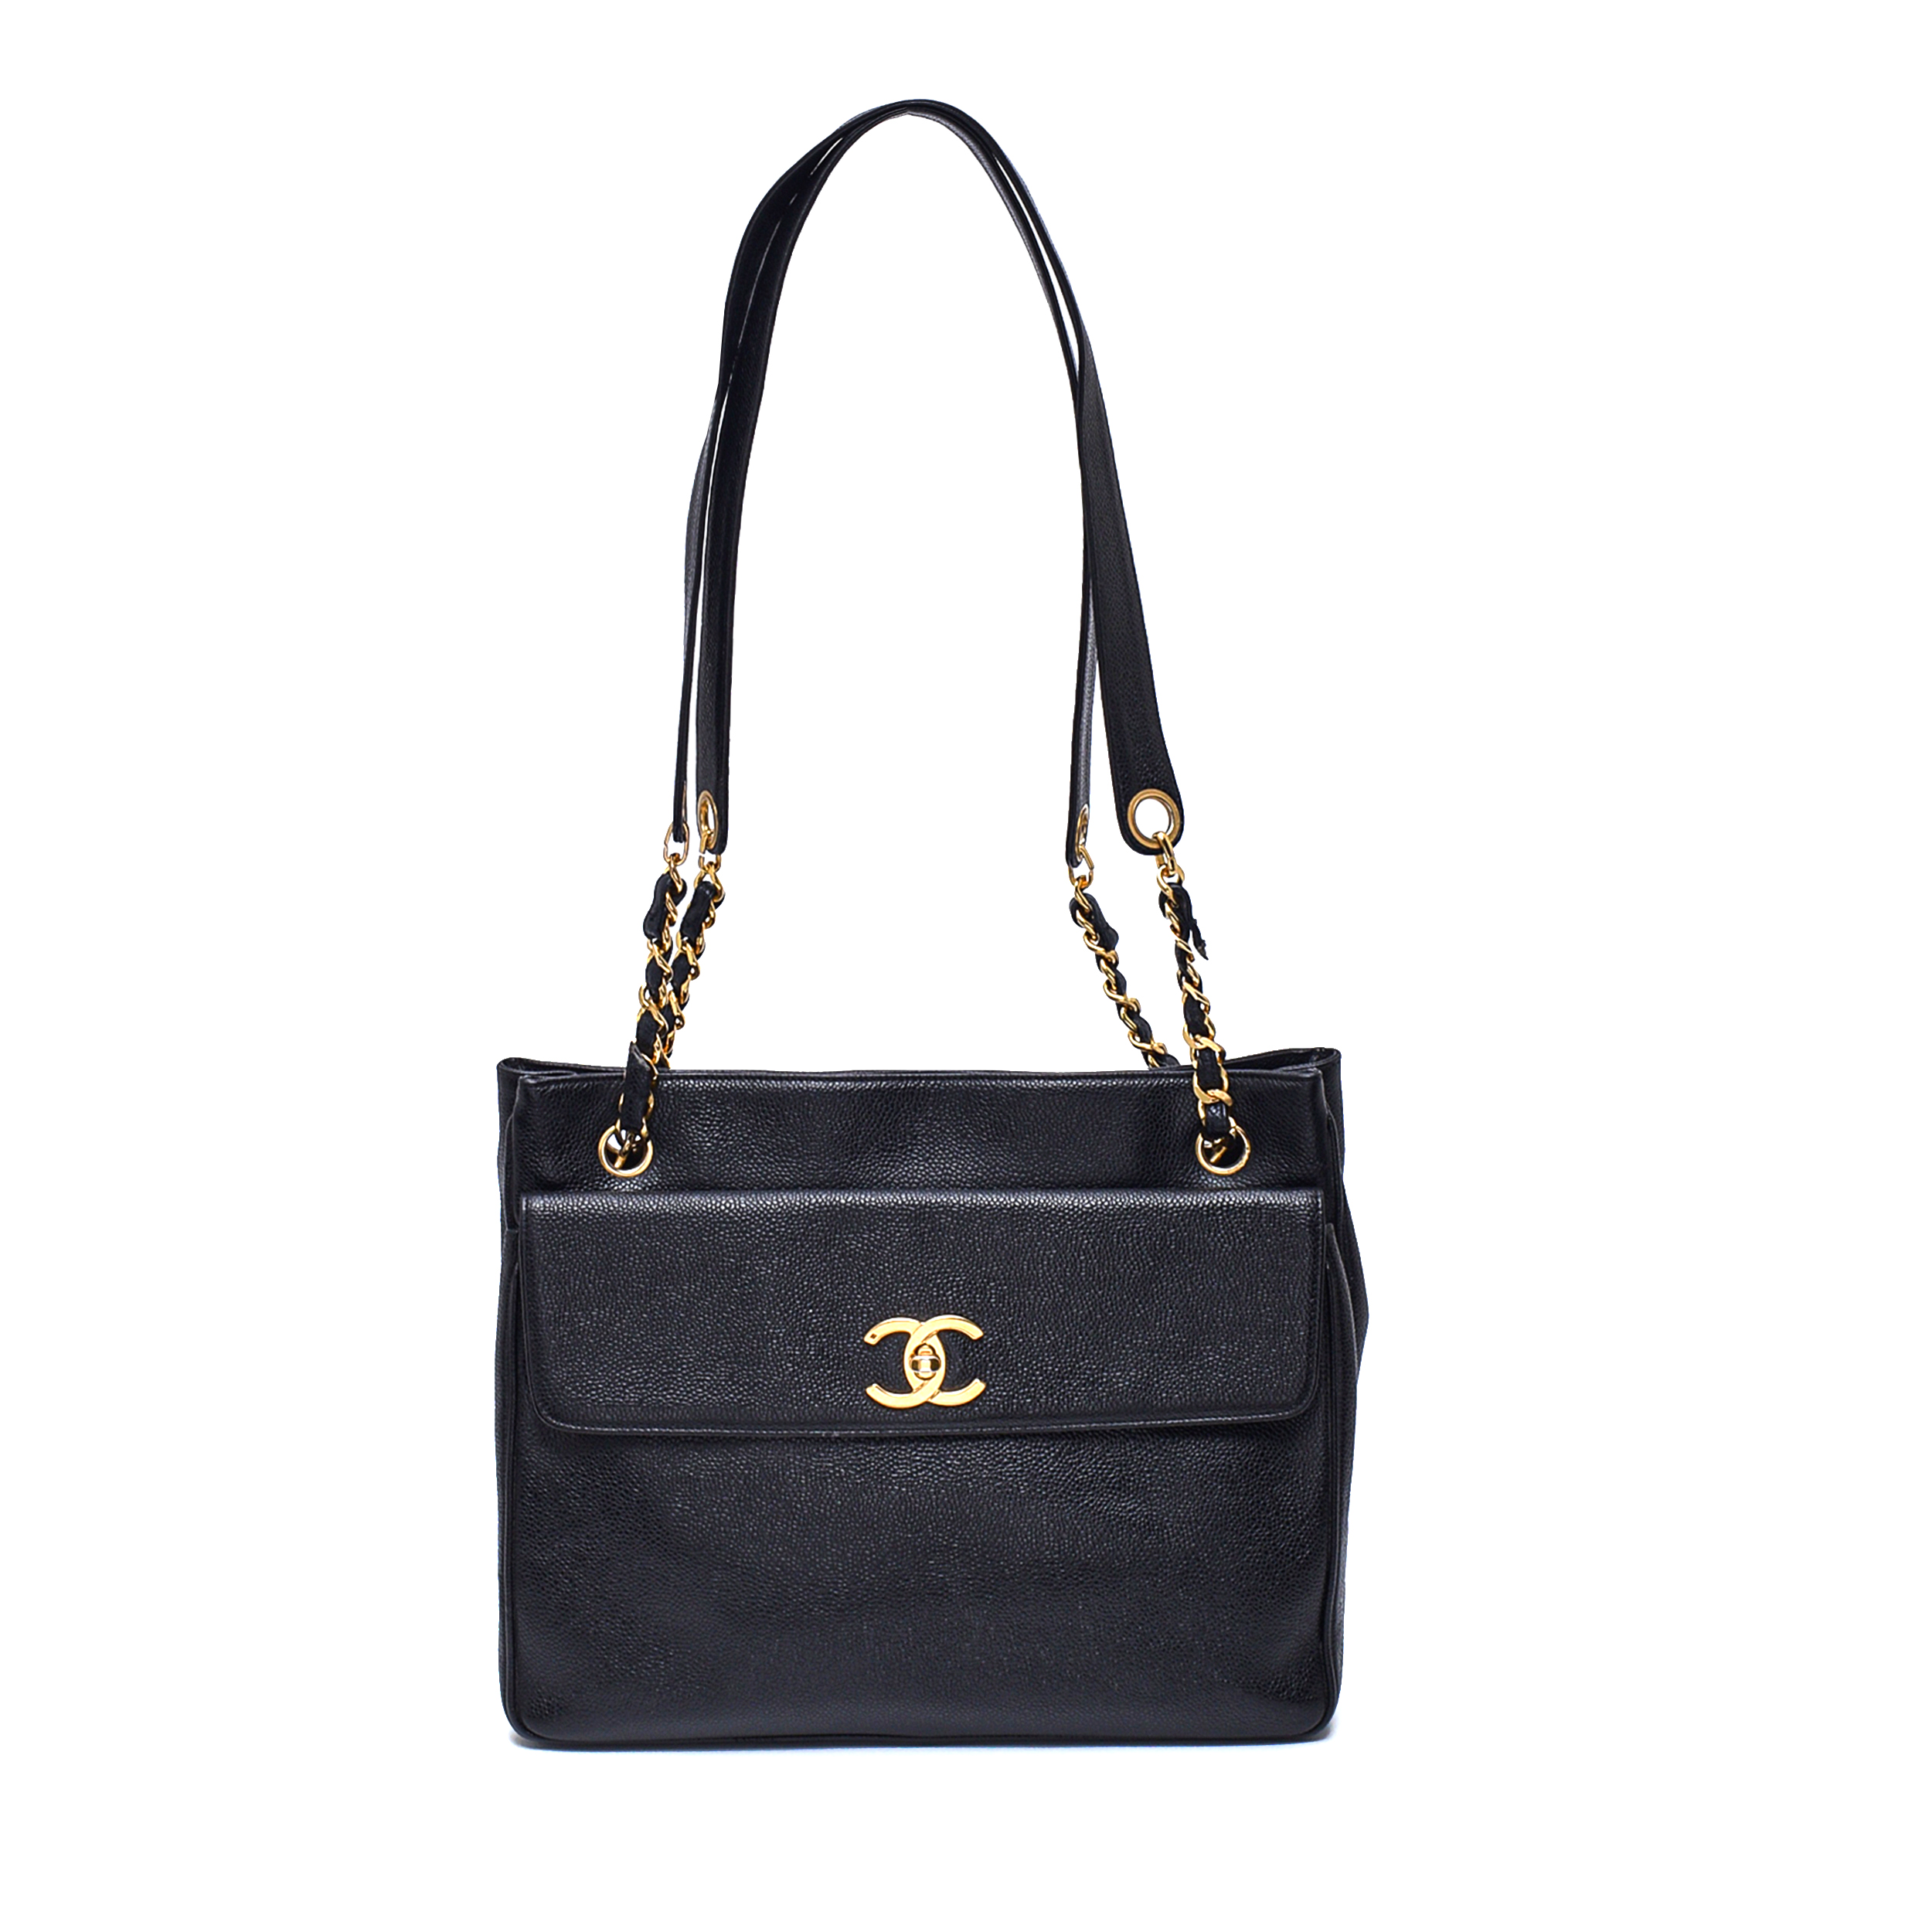 Chanel- Black Caviar Leather CC Turnlock Chain Shoulder Tote Bag